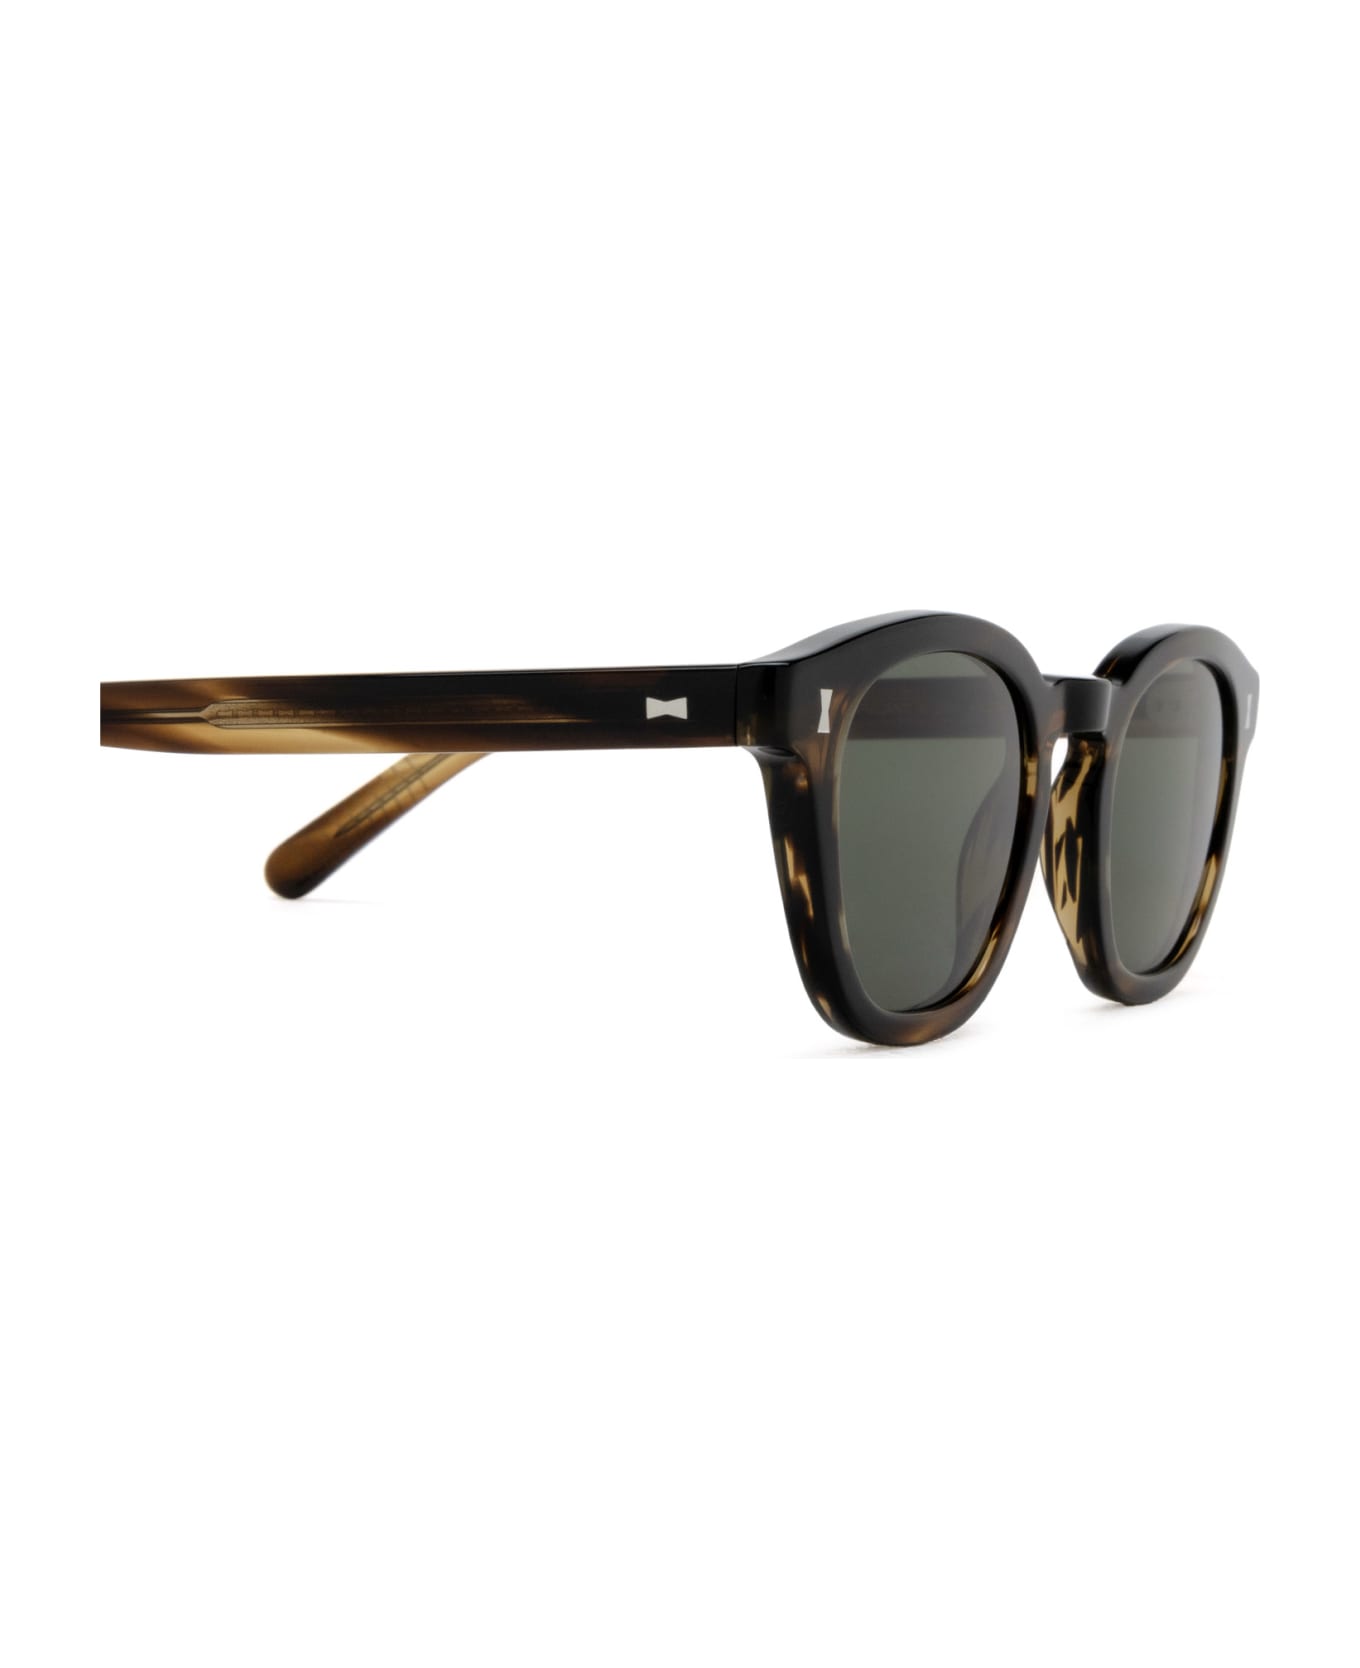 Cubitts Moreland Sun Olive Sunglasses - Olive